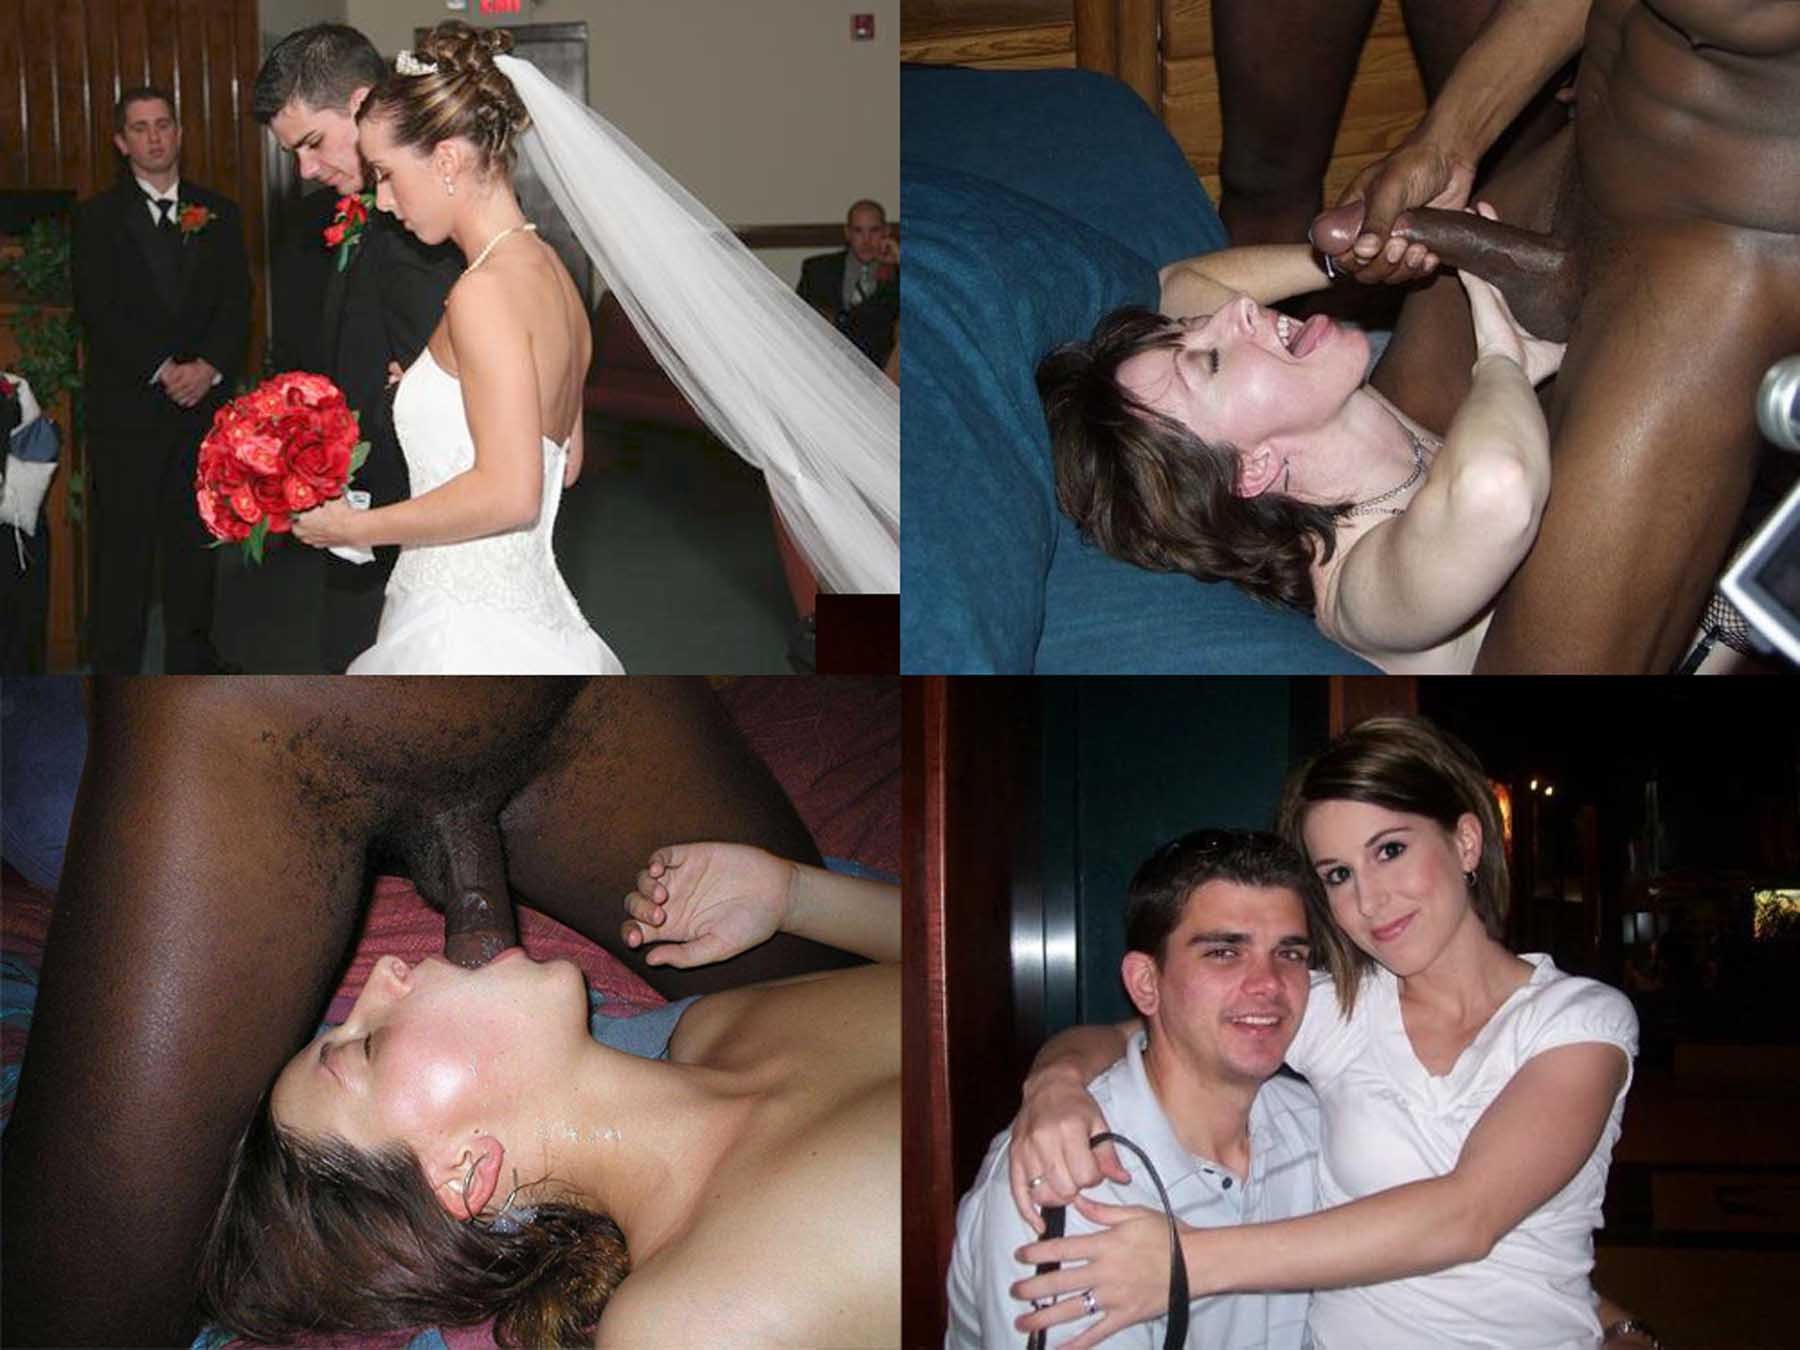 Husband catch cheat wife pic